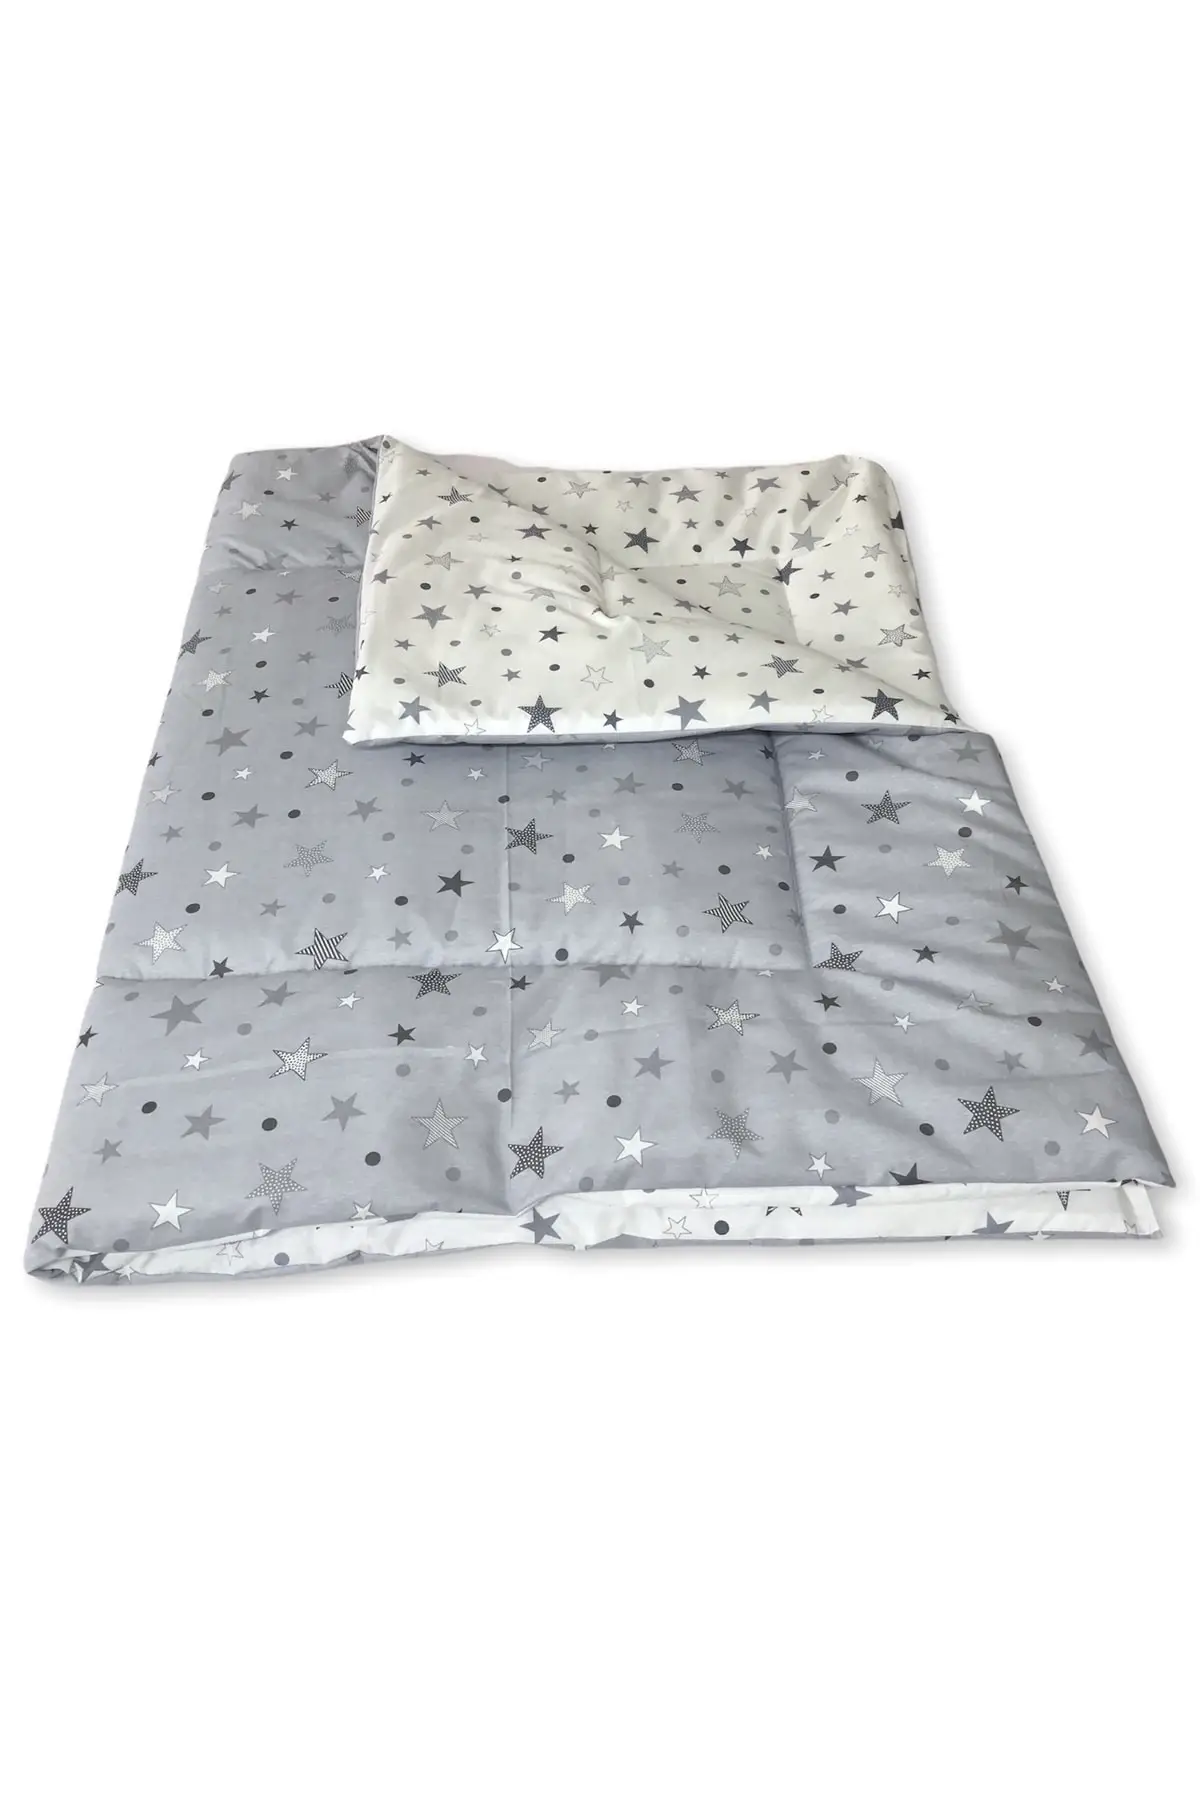 Cotton Baby Child Quilt 130x200 Cm Sizes gray White Star Fiber Baby & Child Quilt Home Textile Textile &